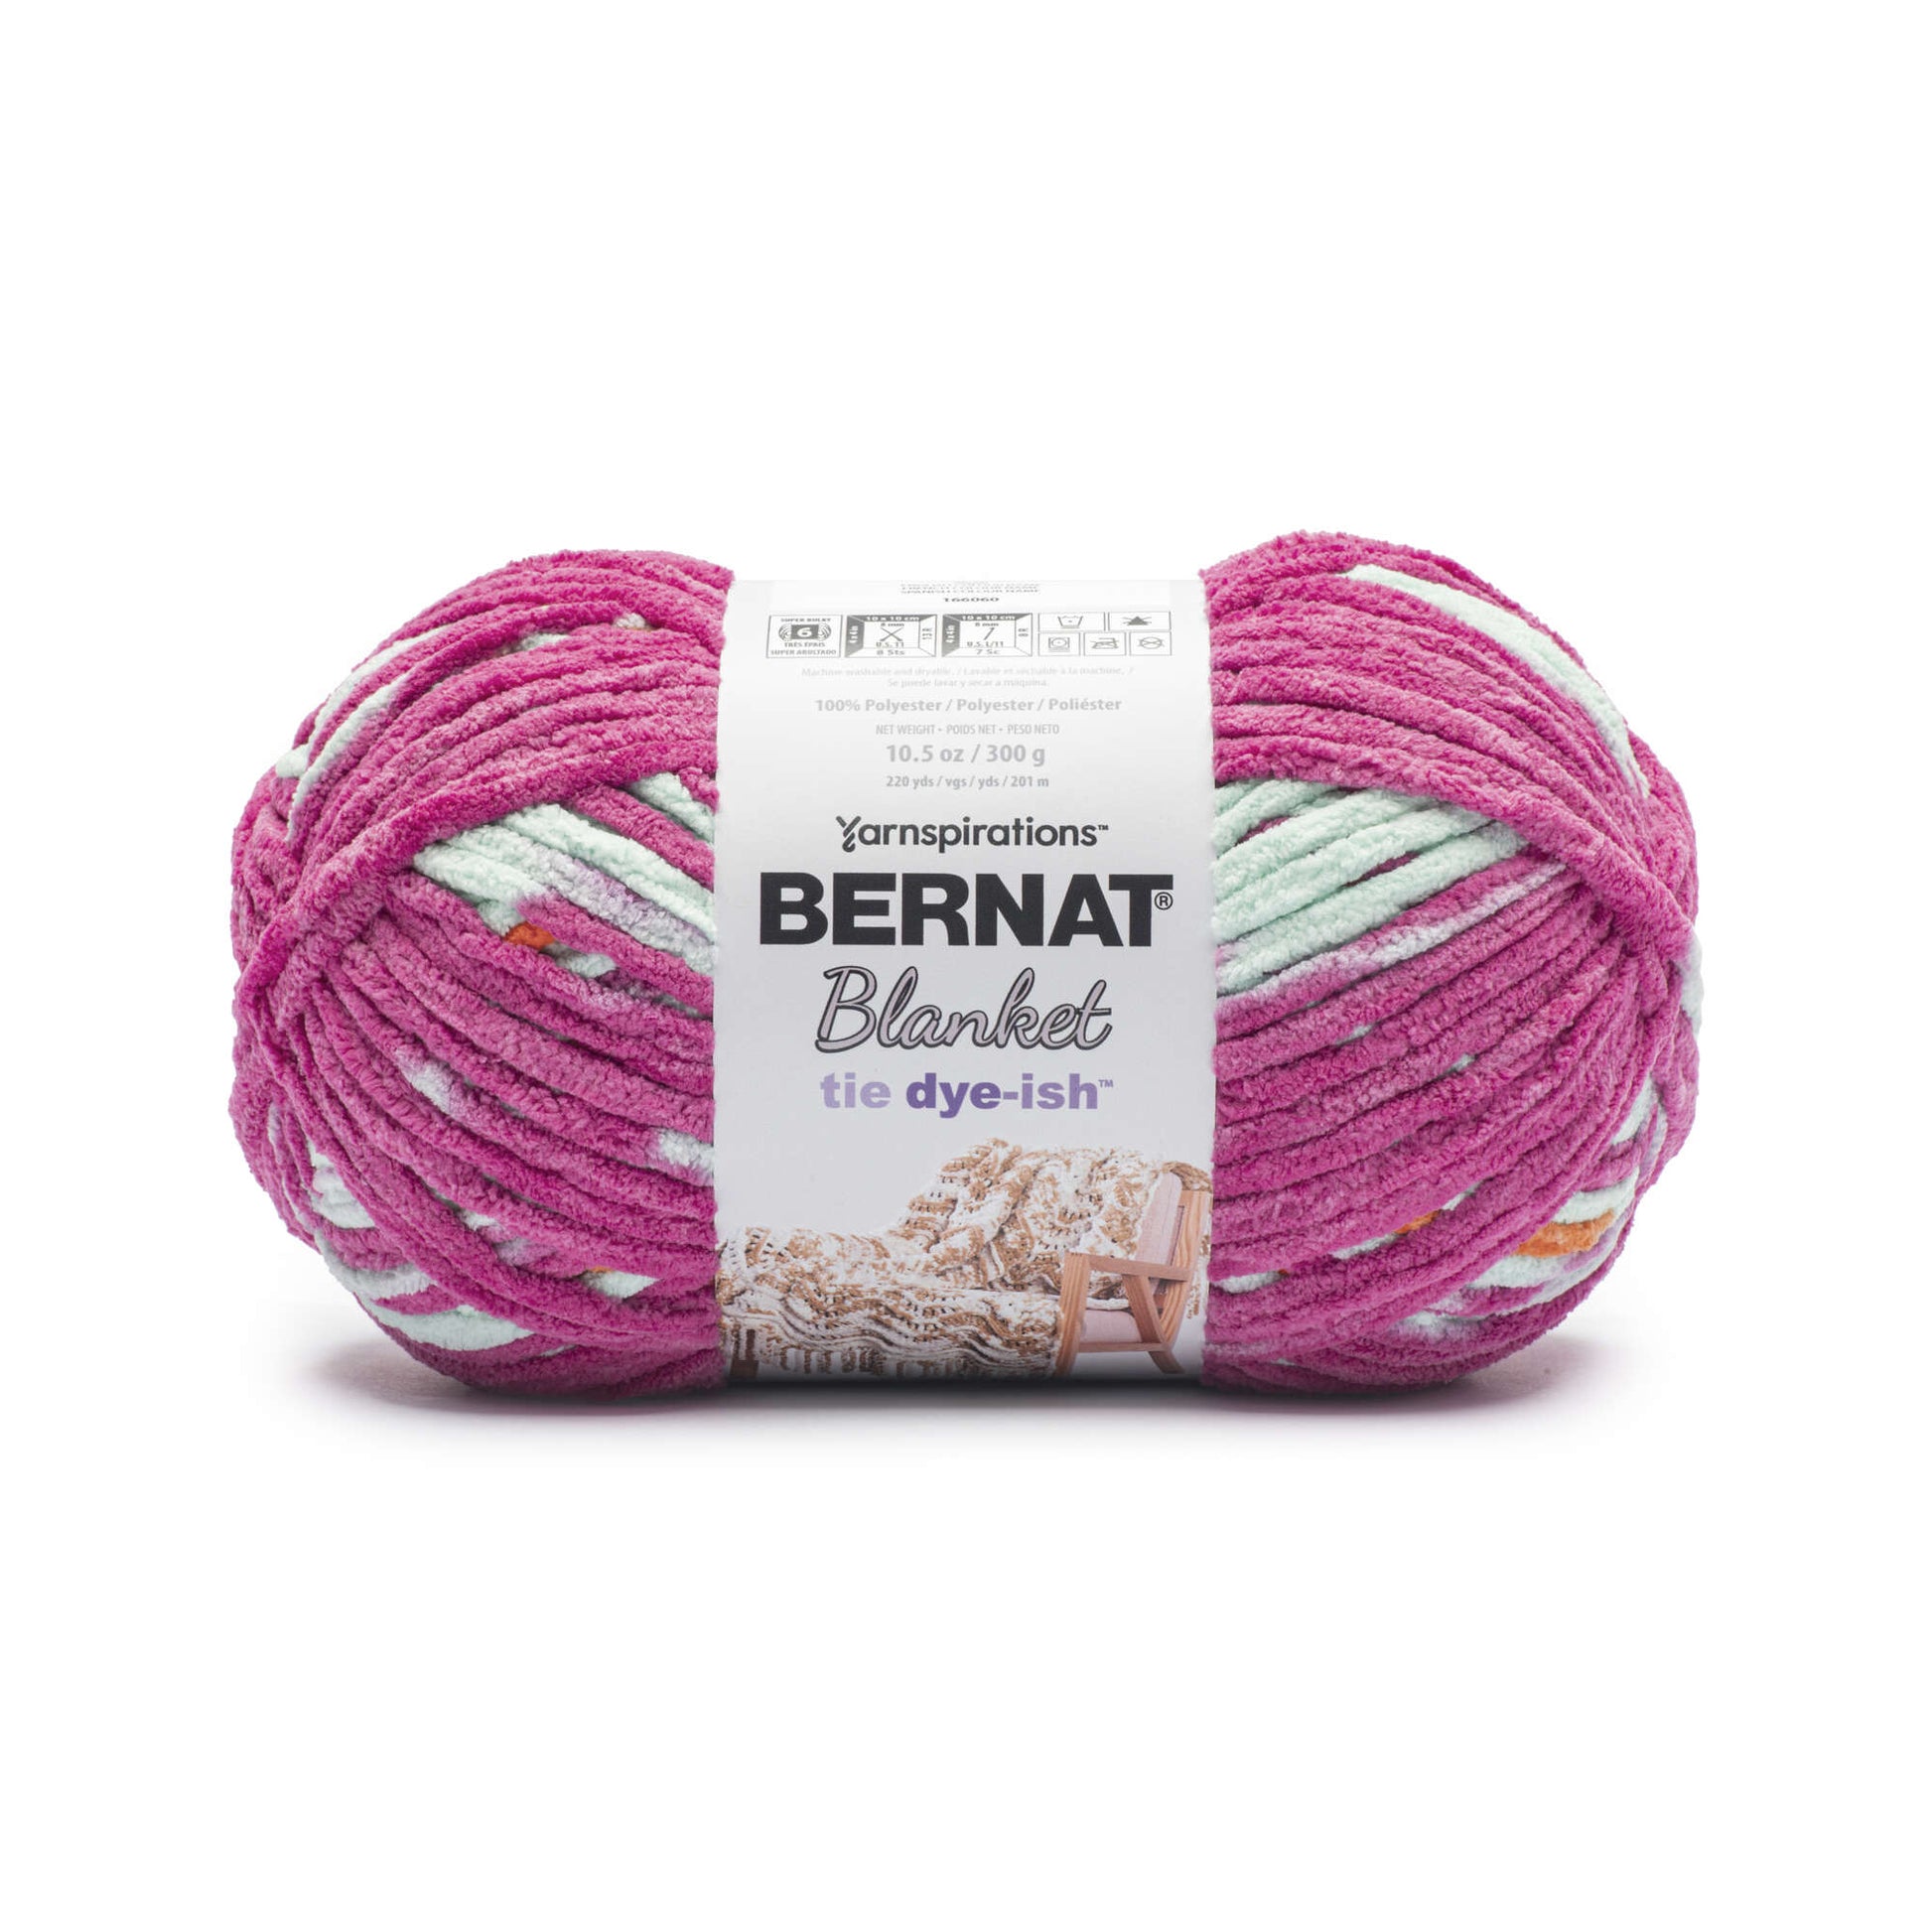 Bernat Blanket Tie Dye-ish Yarn (300g/10.5oz) Fruit Punch